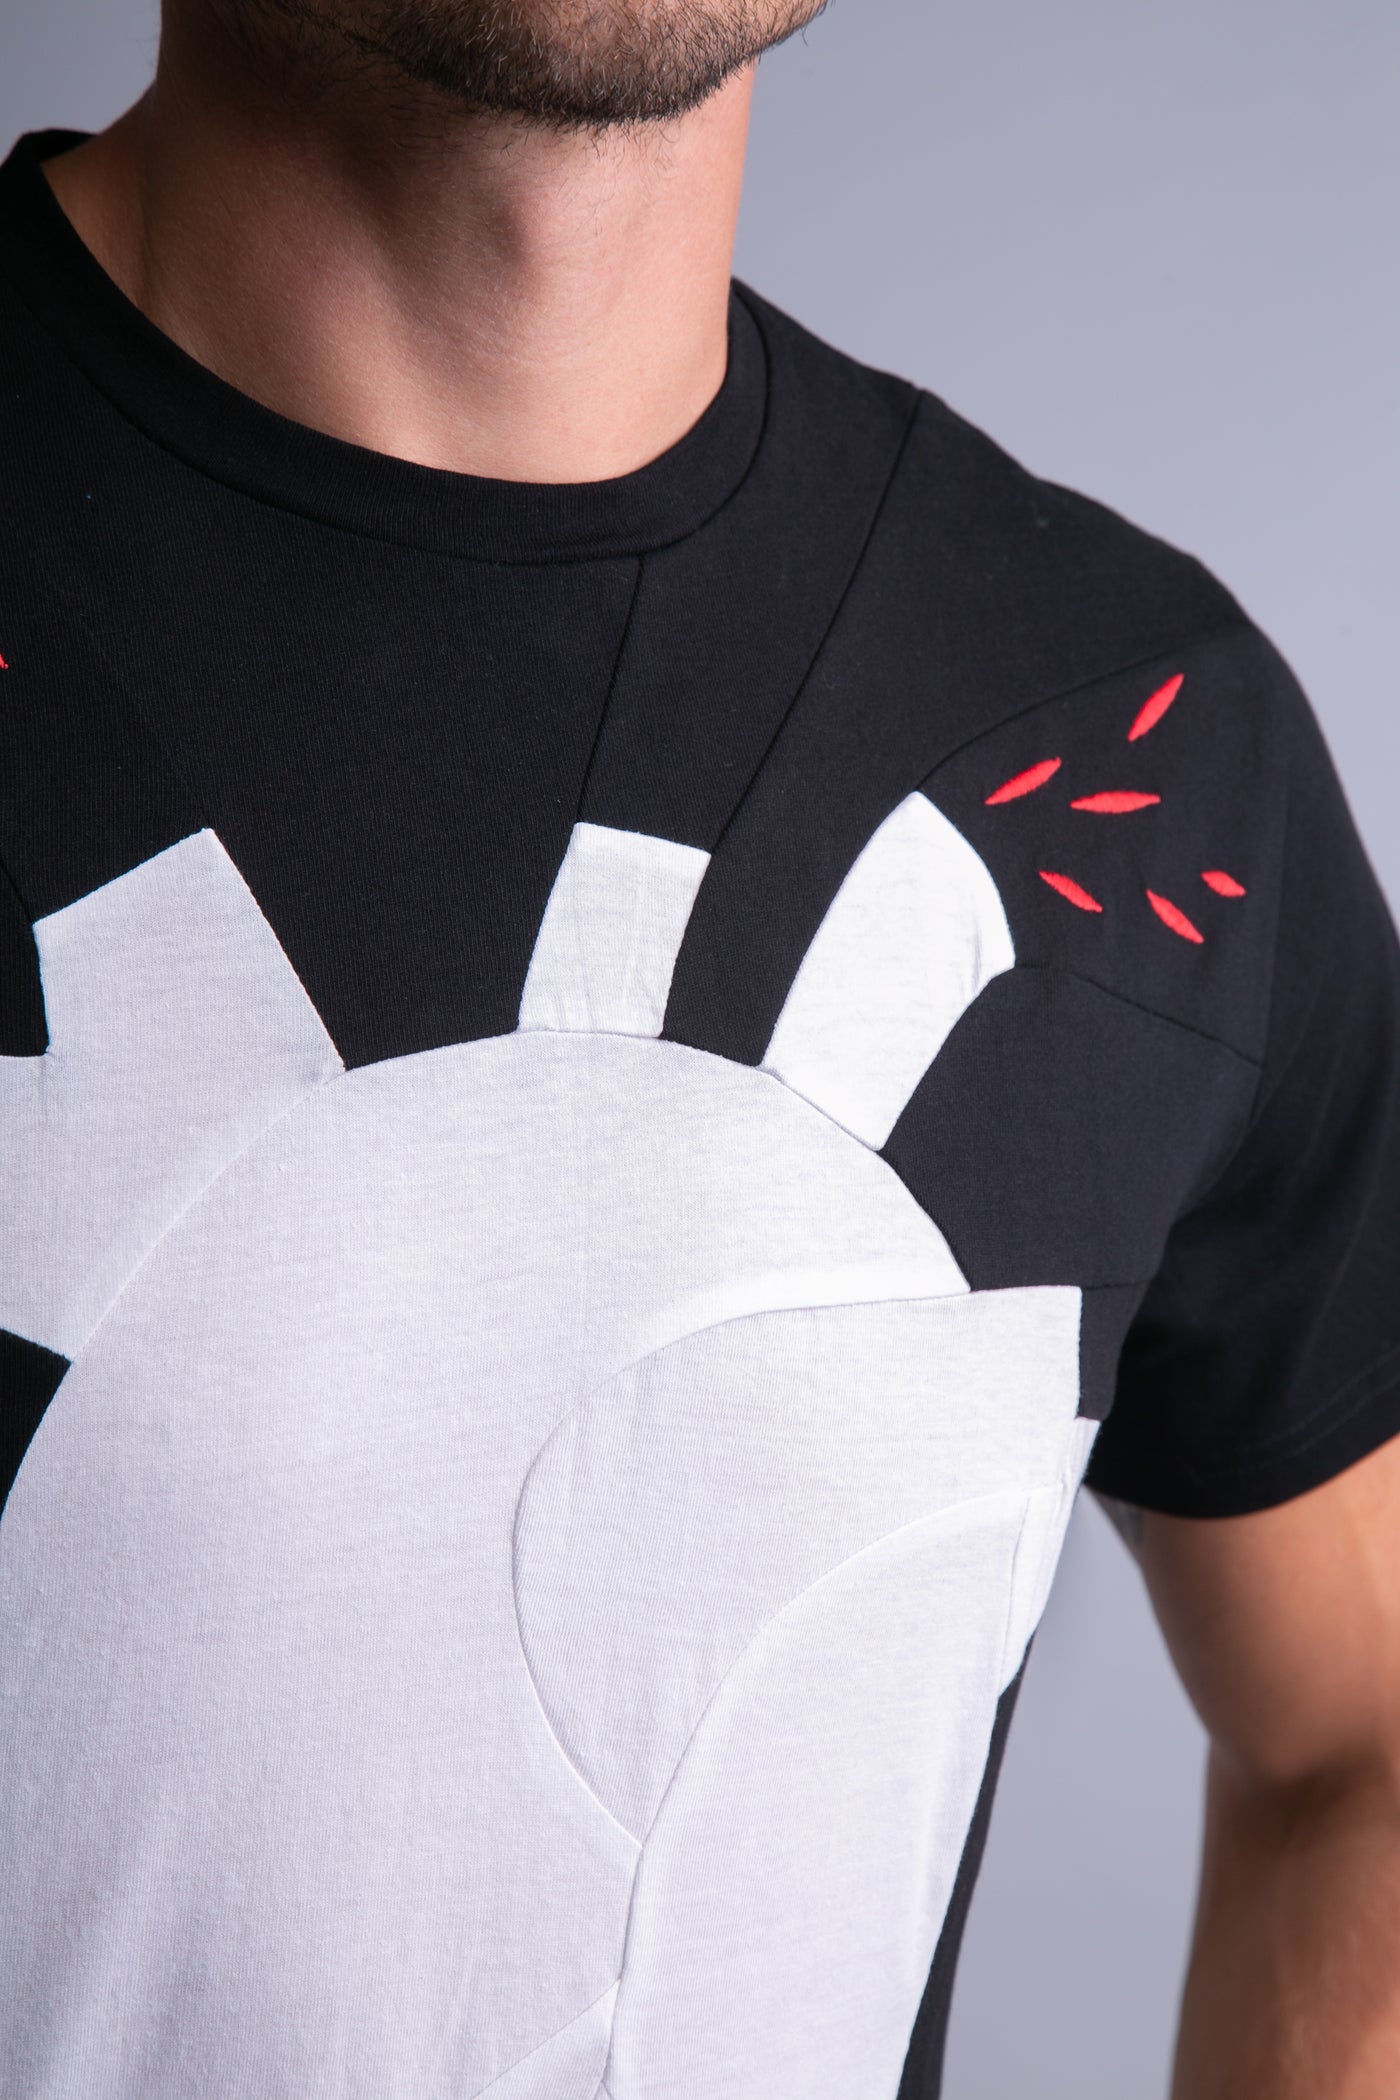 Up-shirt for men, heart motif | Black, white - Reet Aus